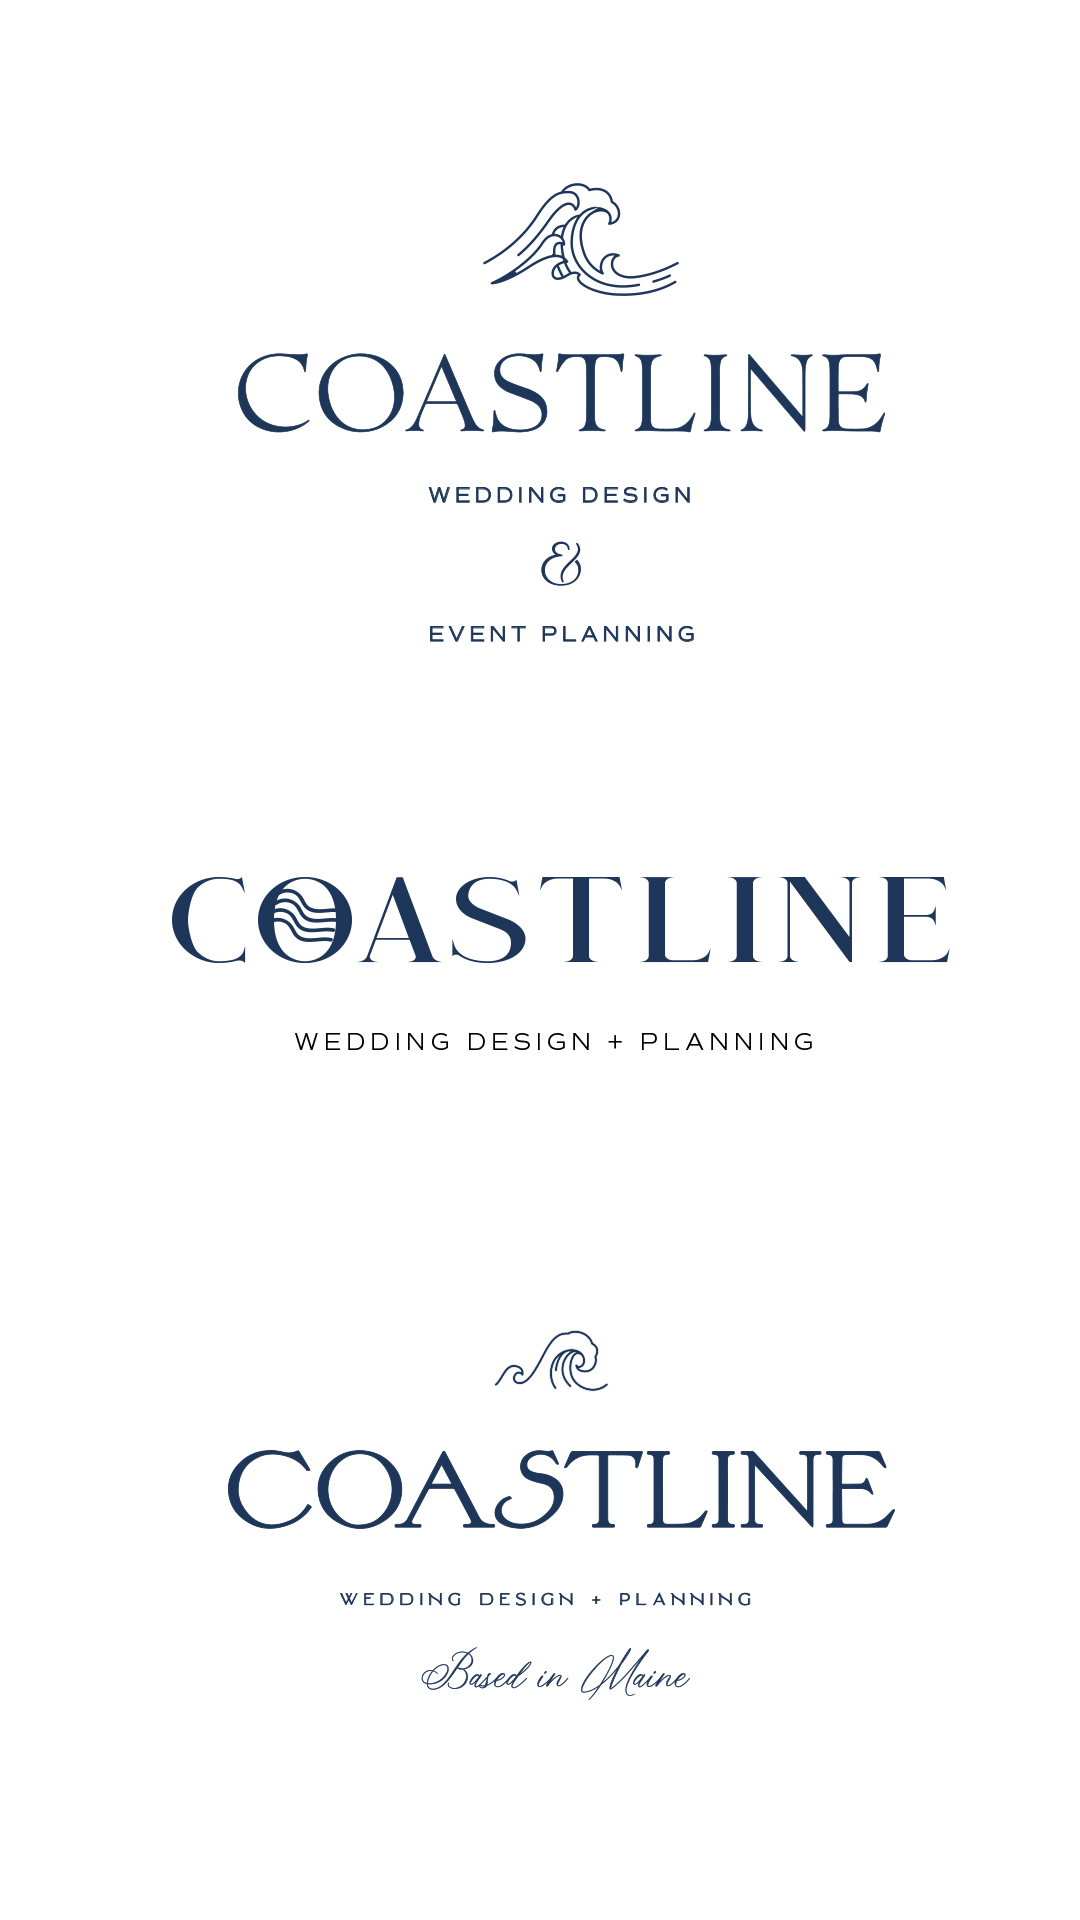 custom logo design for wedding planner / branding for creatives and wedding businesses / coastal logo